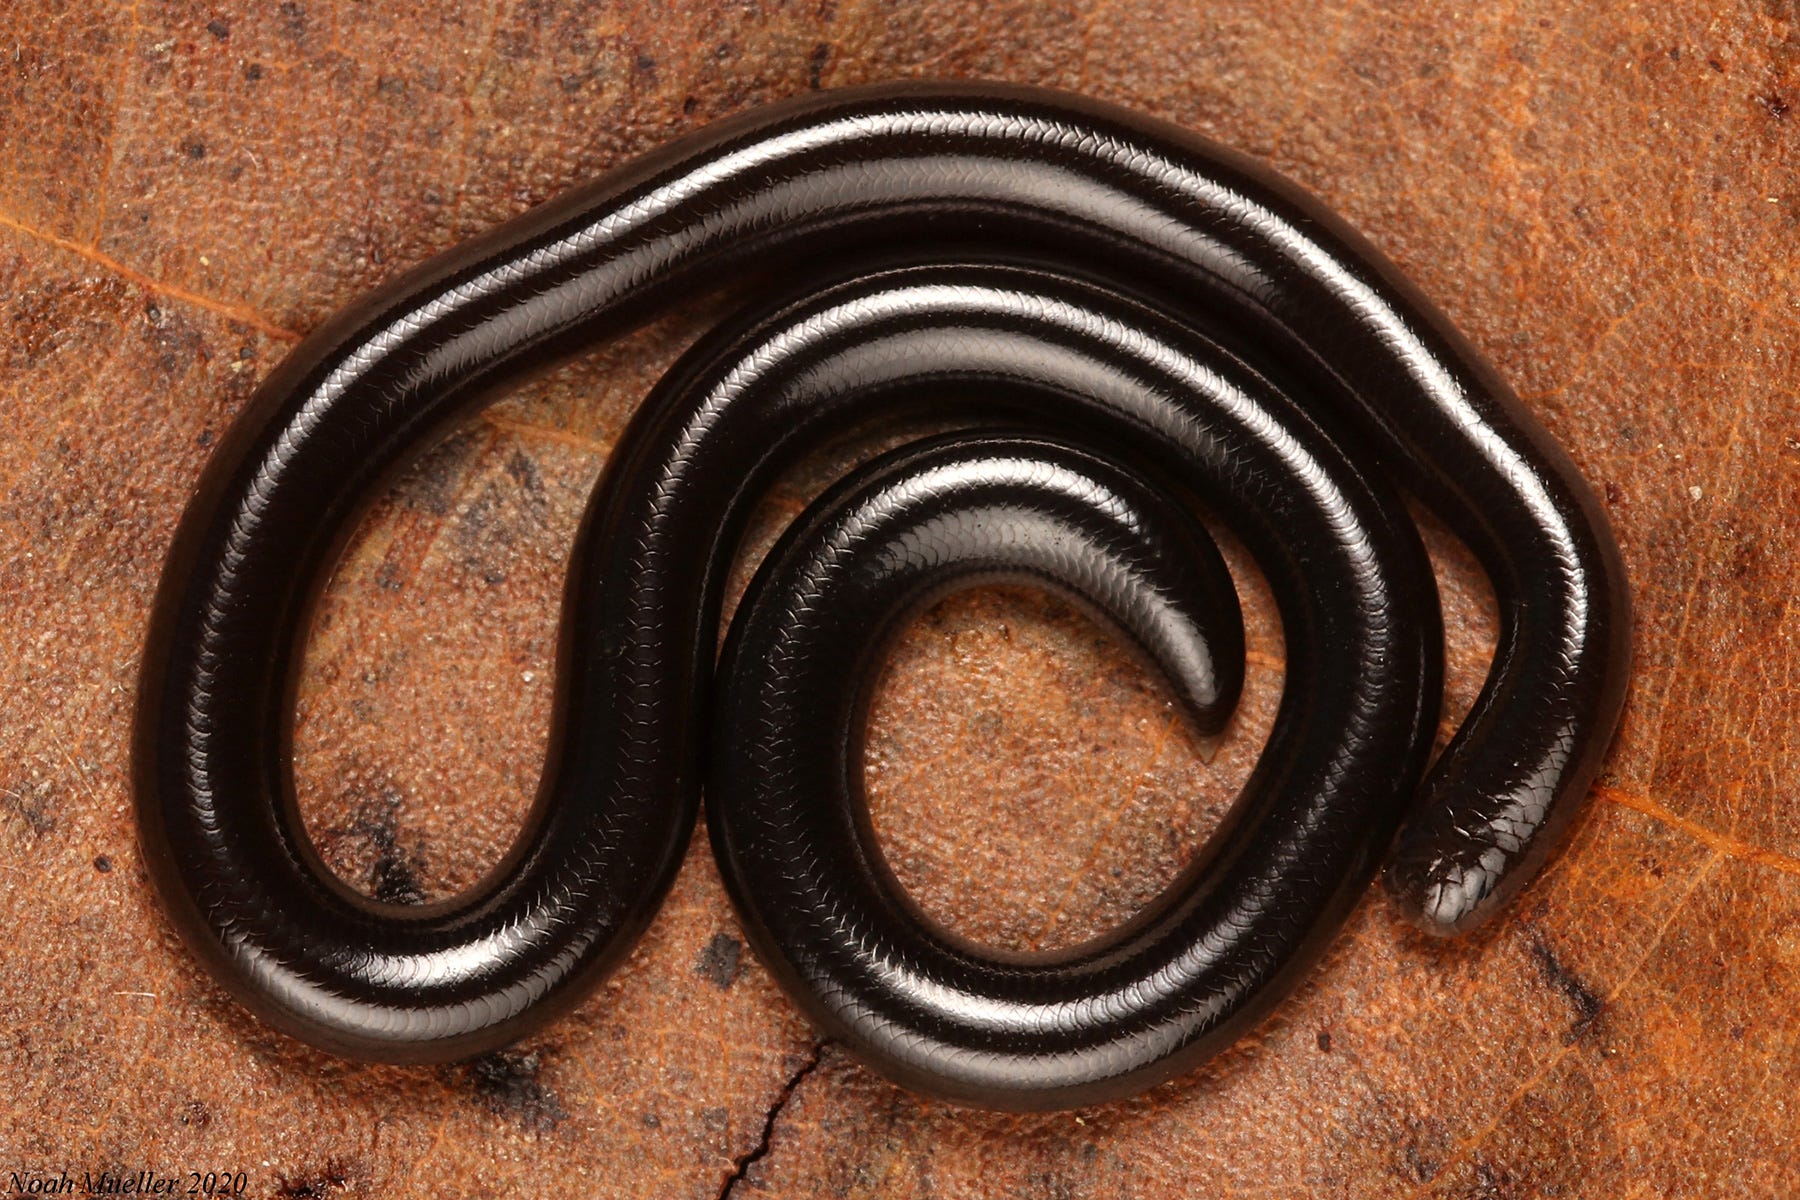 thin shiny black snake